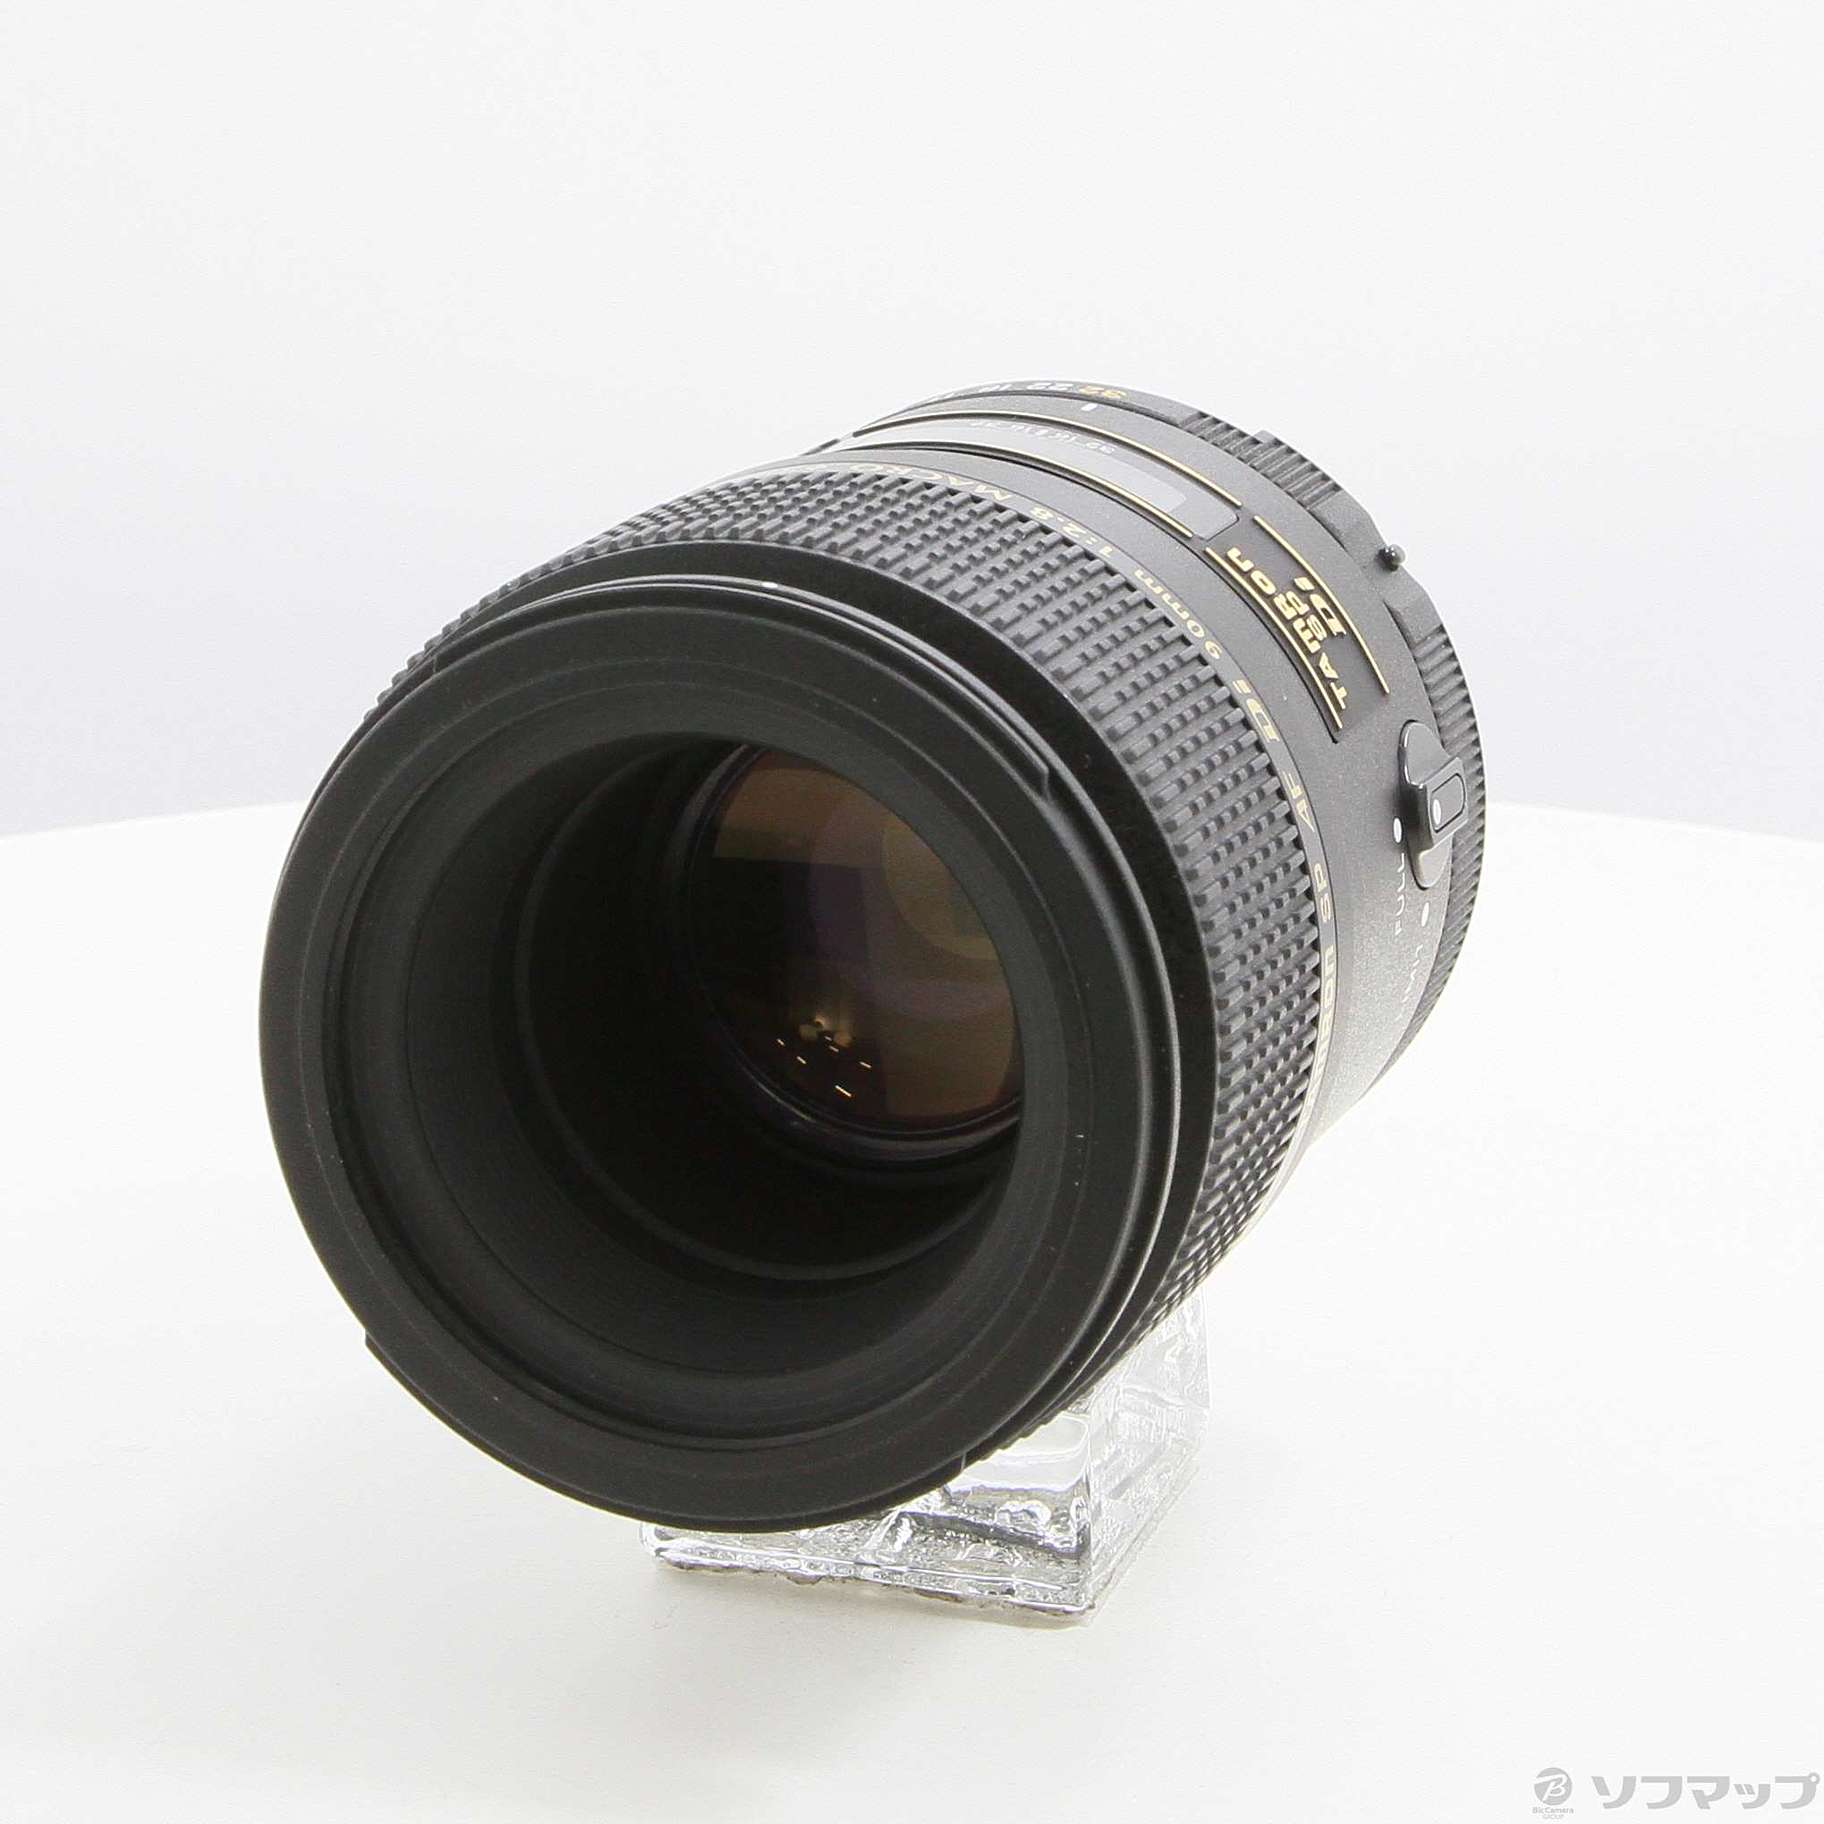 中古】TAMRON SP AF 90mm F2.8 Di MACRO (272EN) (Nikon用